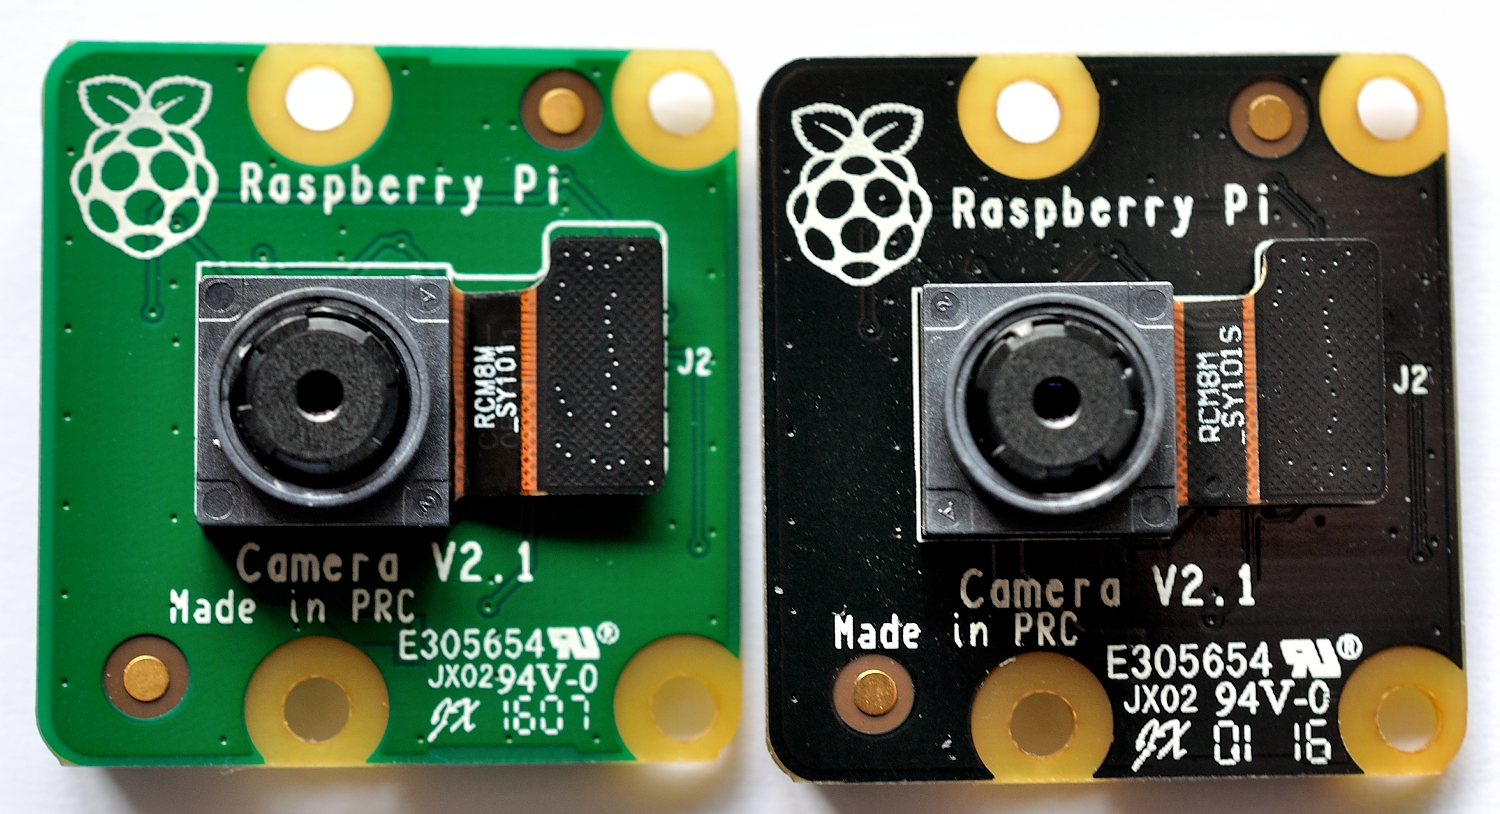 Raspberry Pi Camera Board v2 - 8 Megapixels : ID 3099 : $29.95